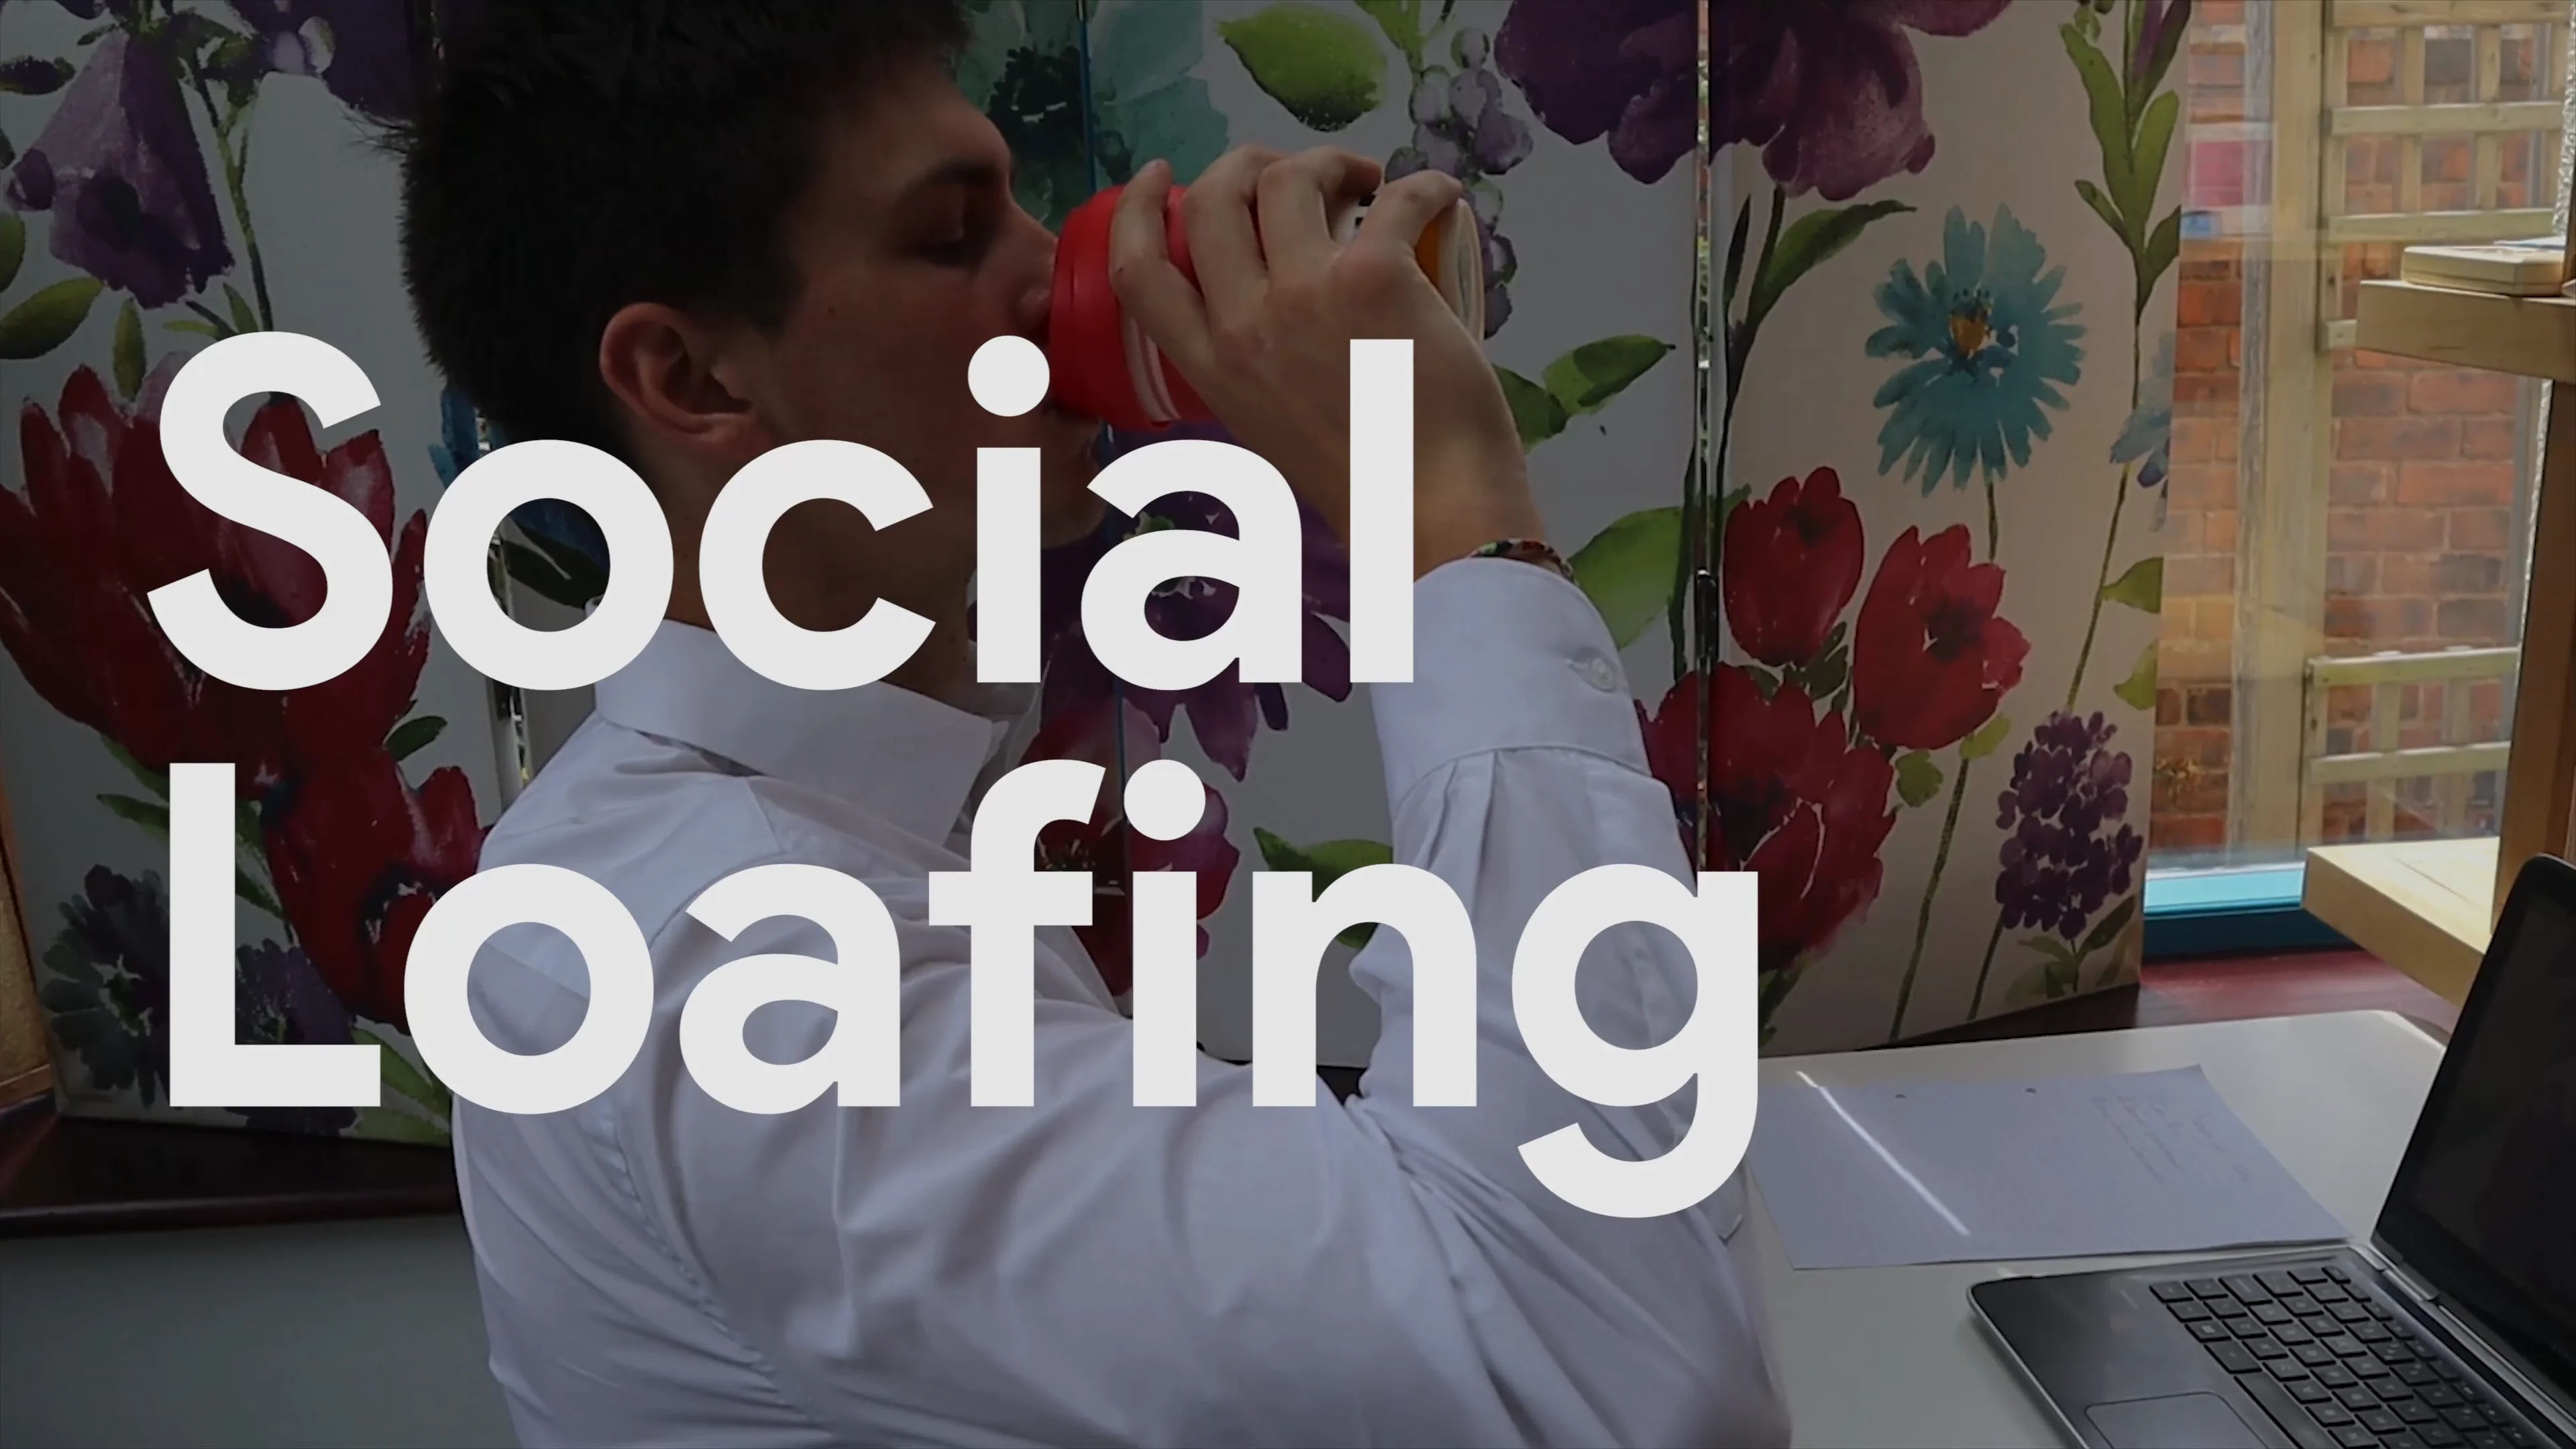 social loafing